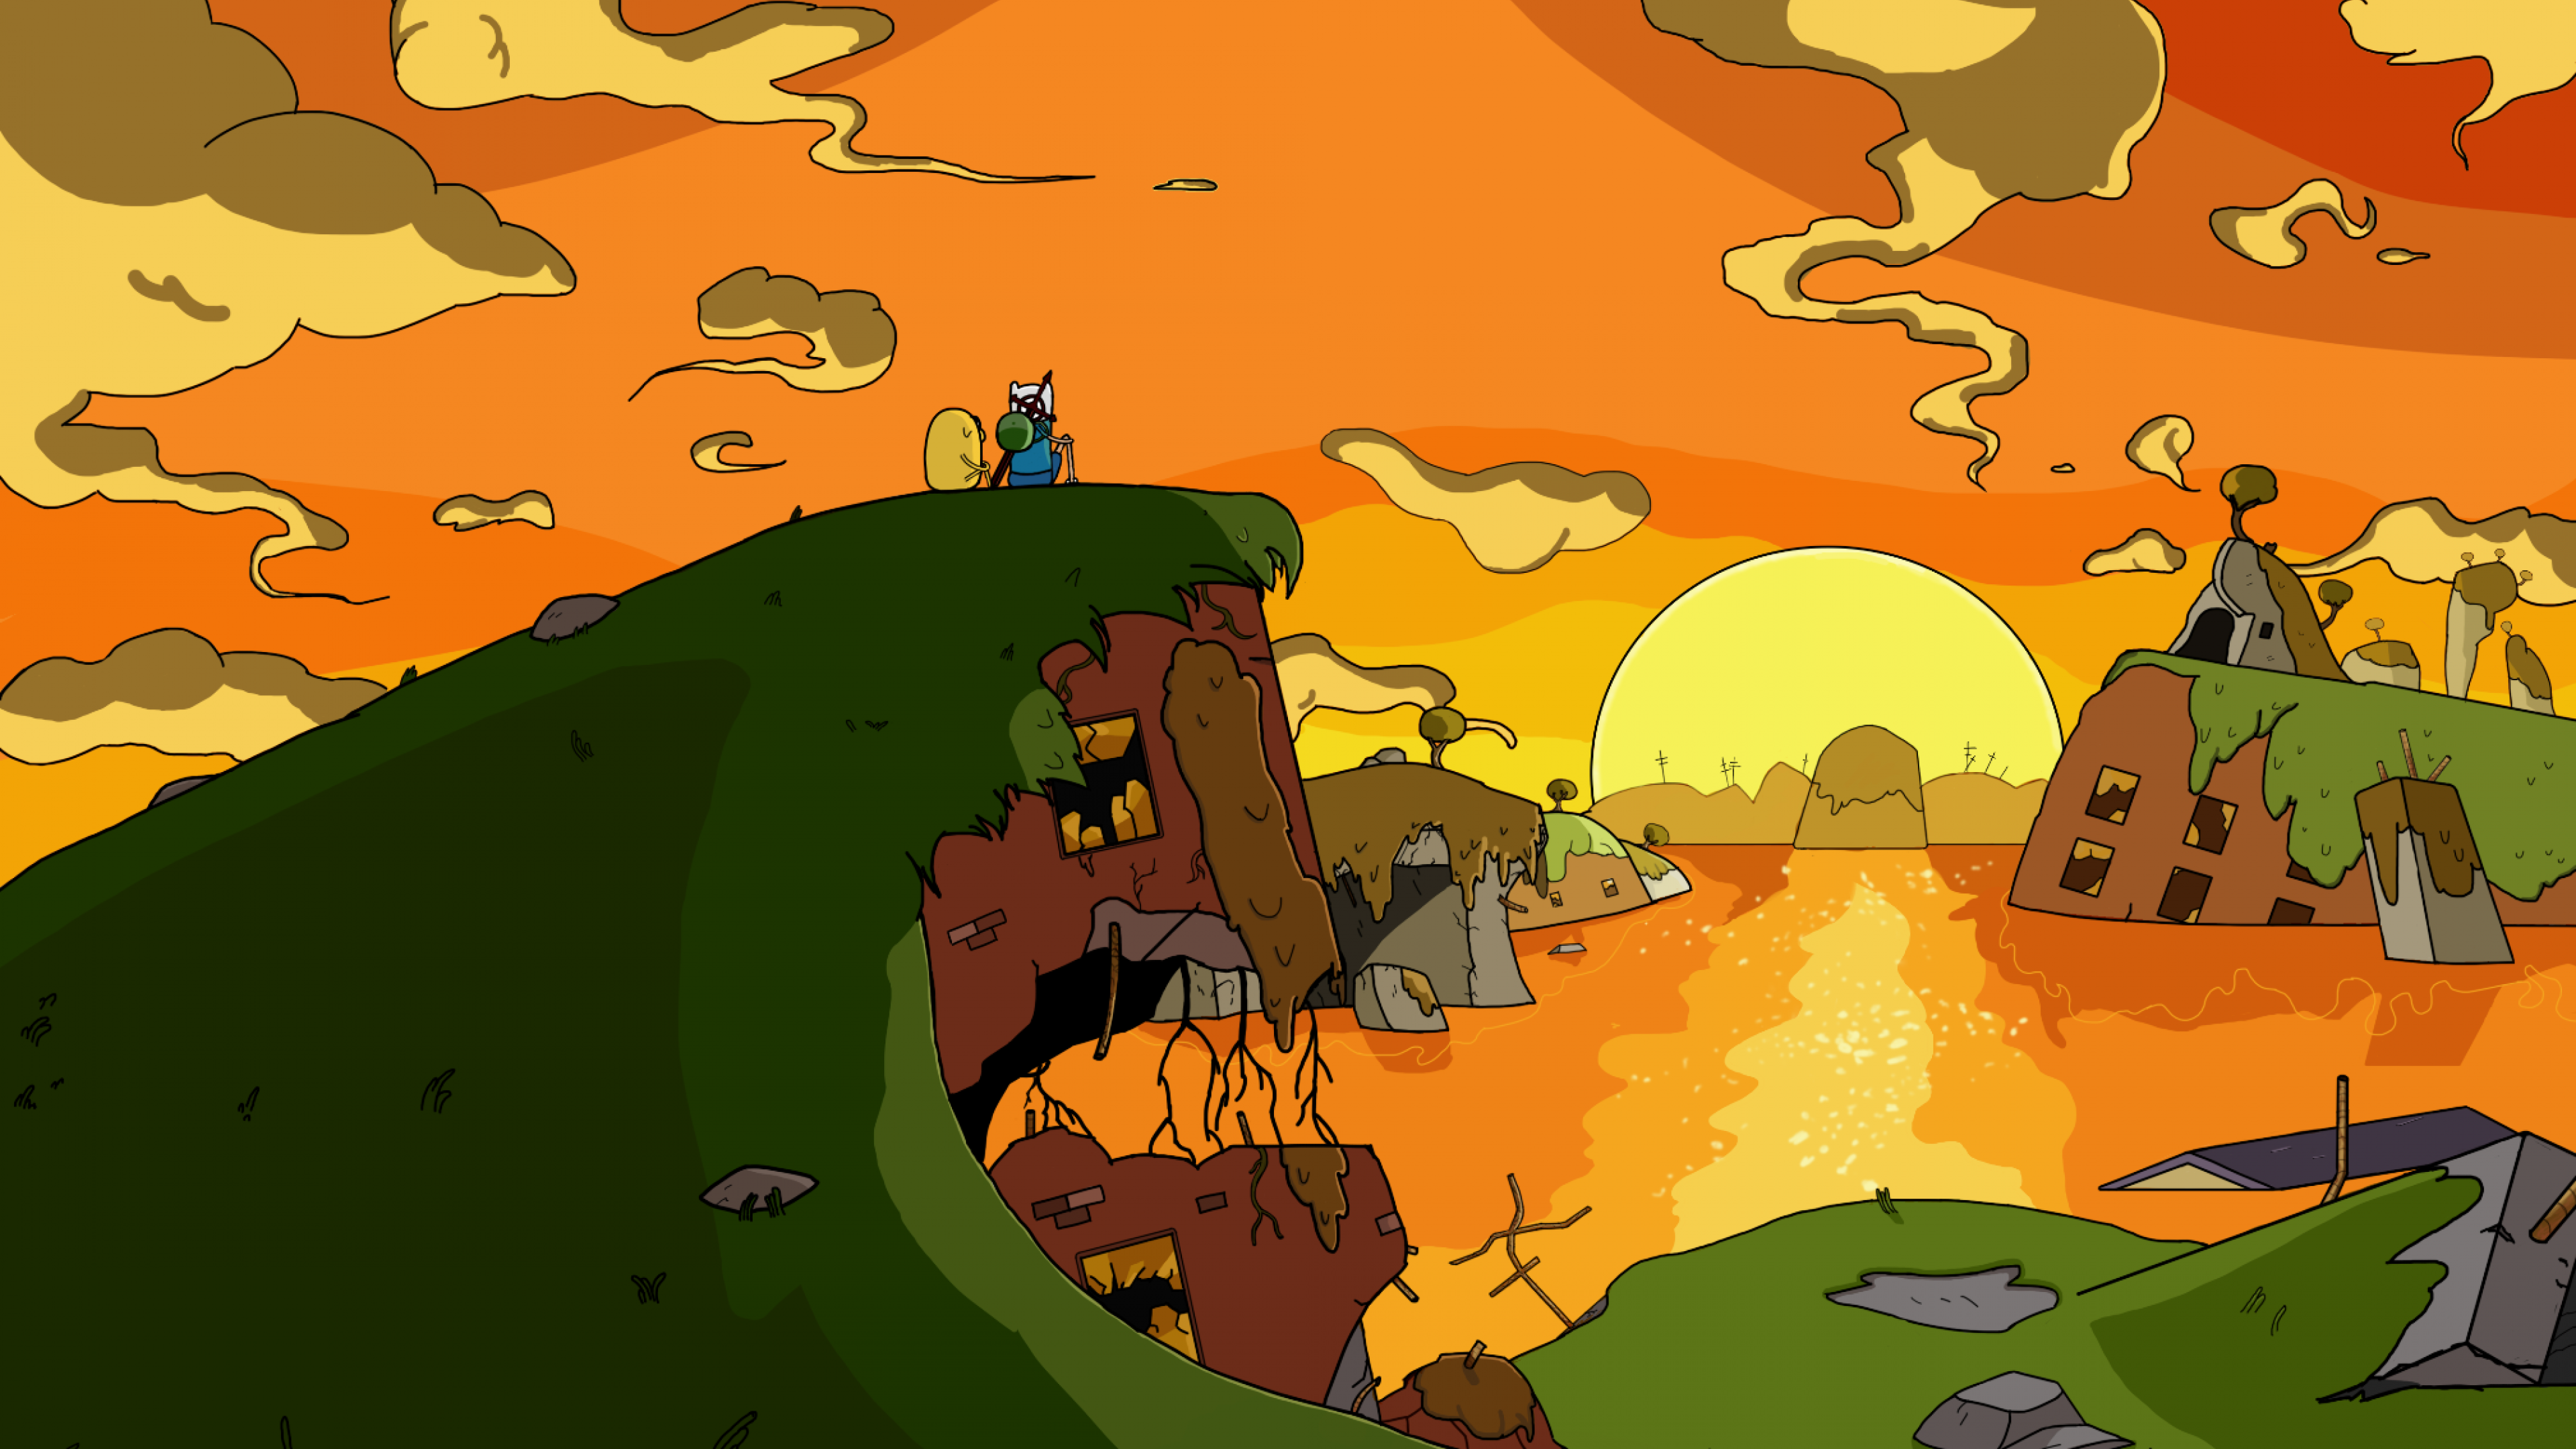 Adventure Time wallpapers download free | PixelsTalk.Net